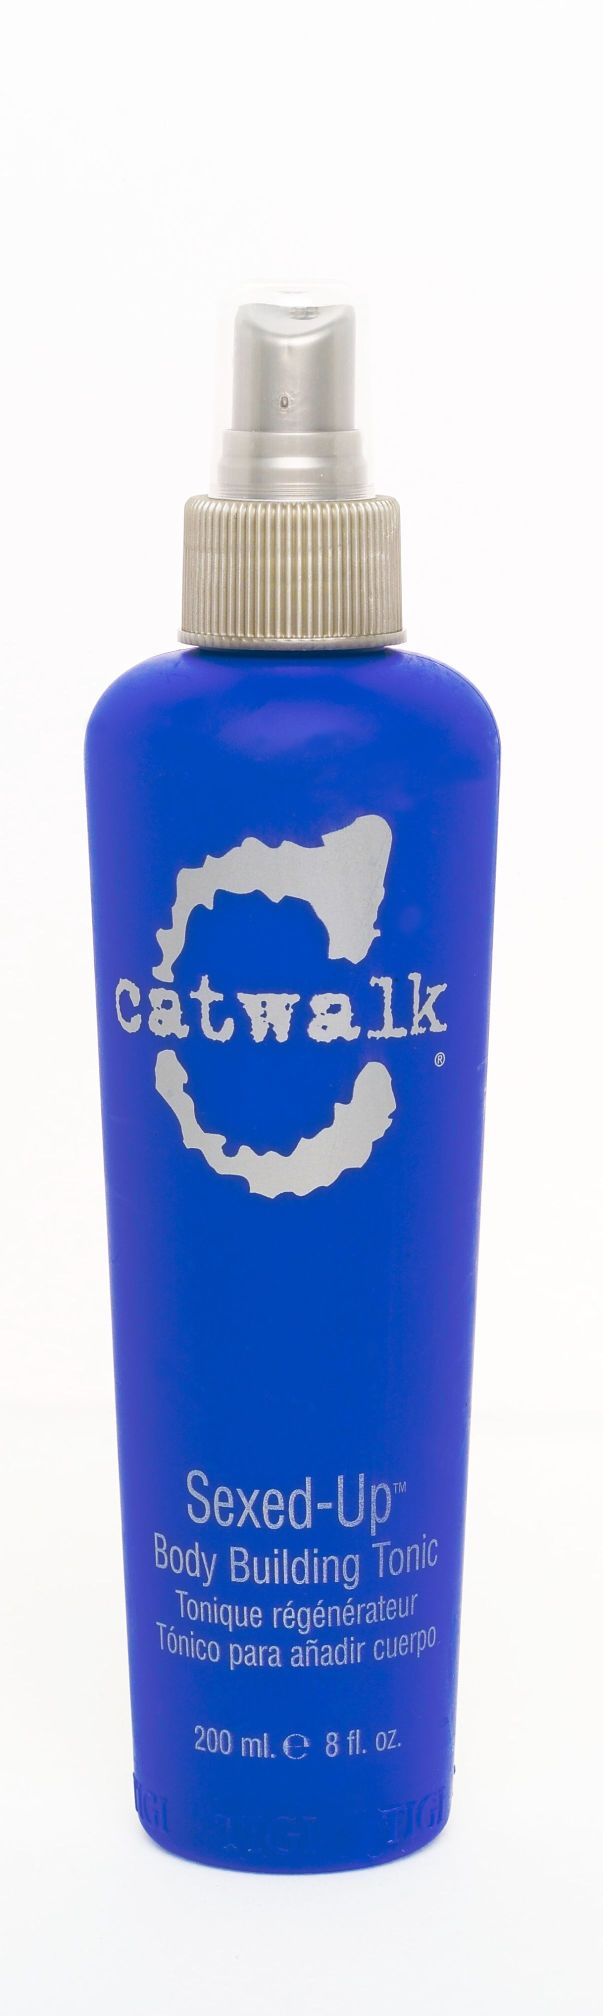 catwalk Sexed-Up Tonic - 200ml